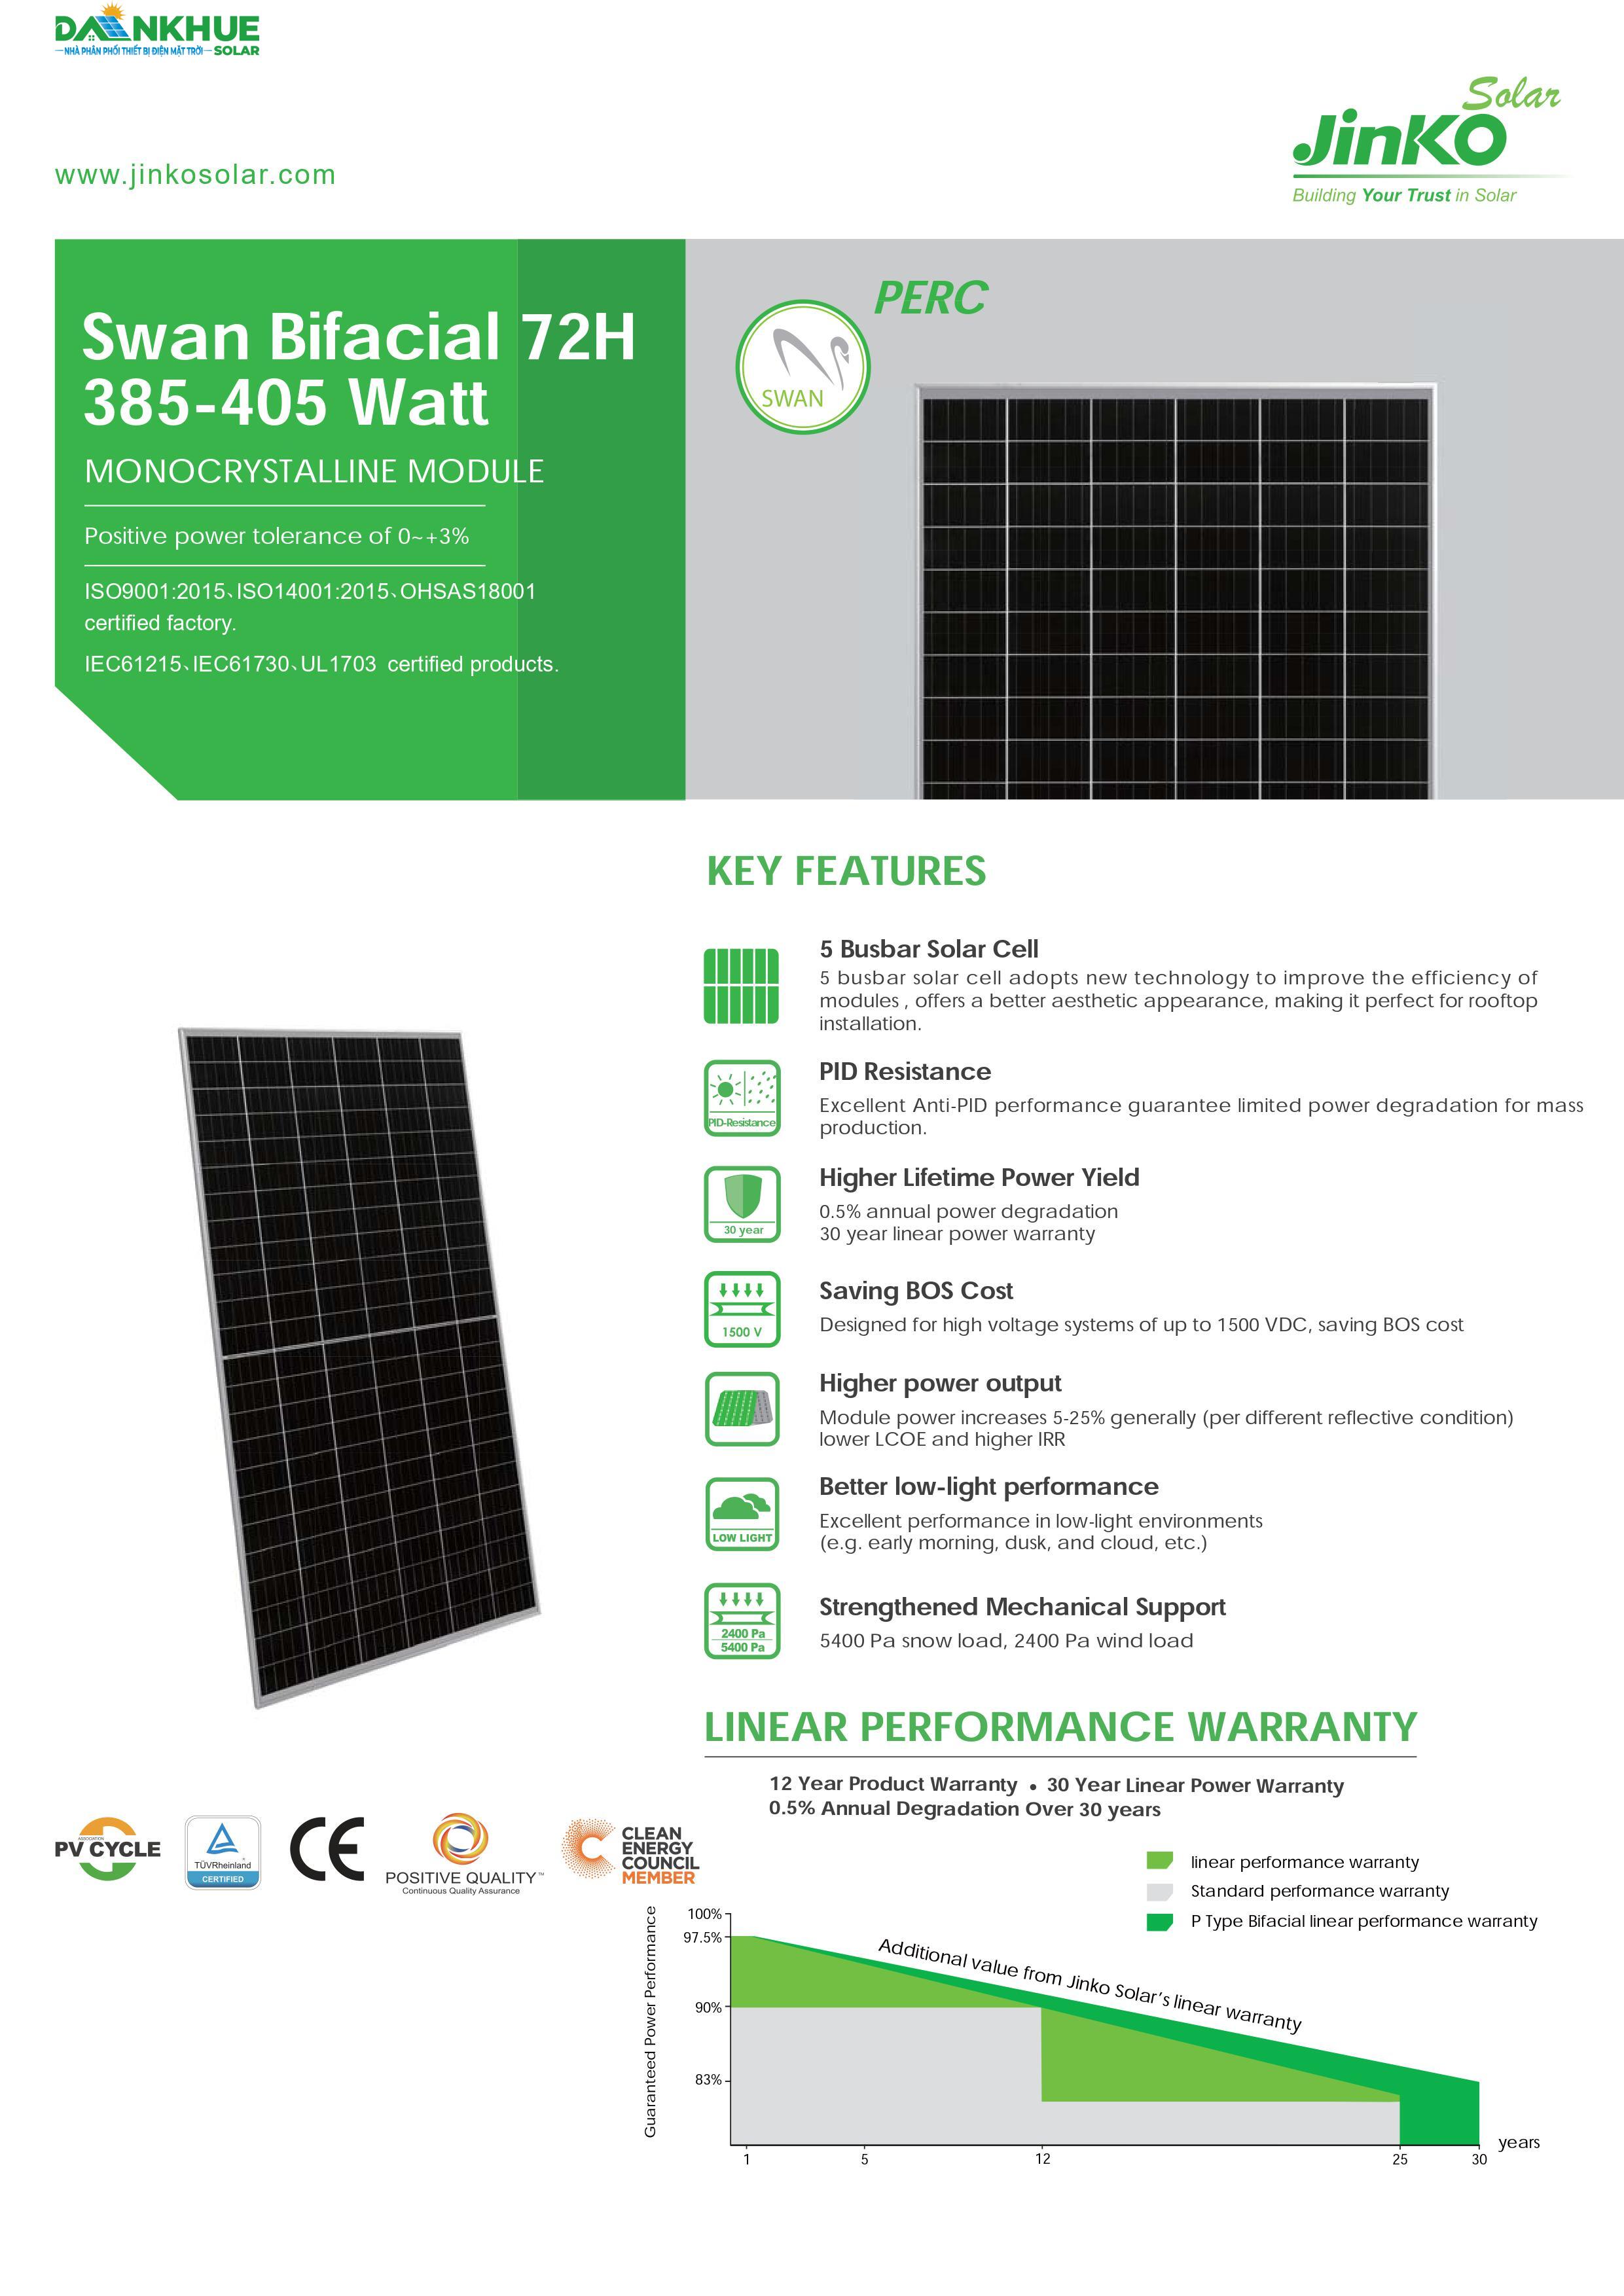 datasheet thông tin panel solar Jinko Swan Bifacial 72H 385-405W